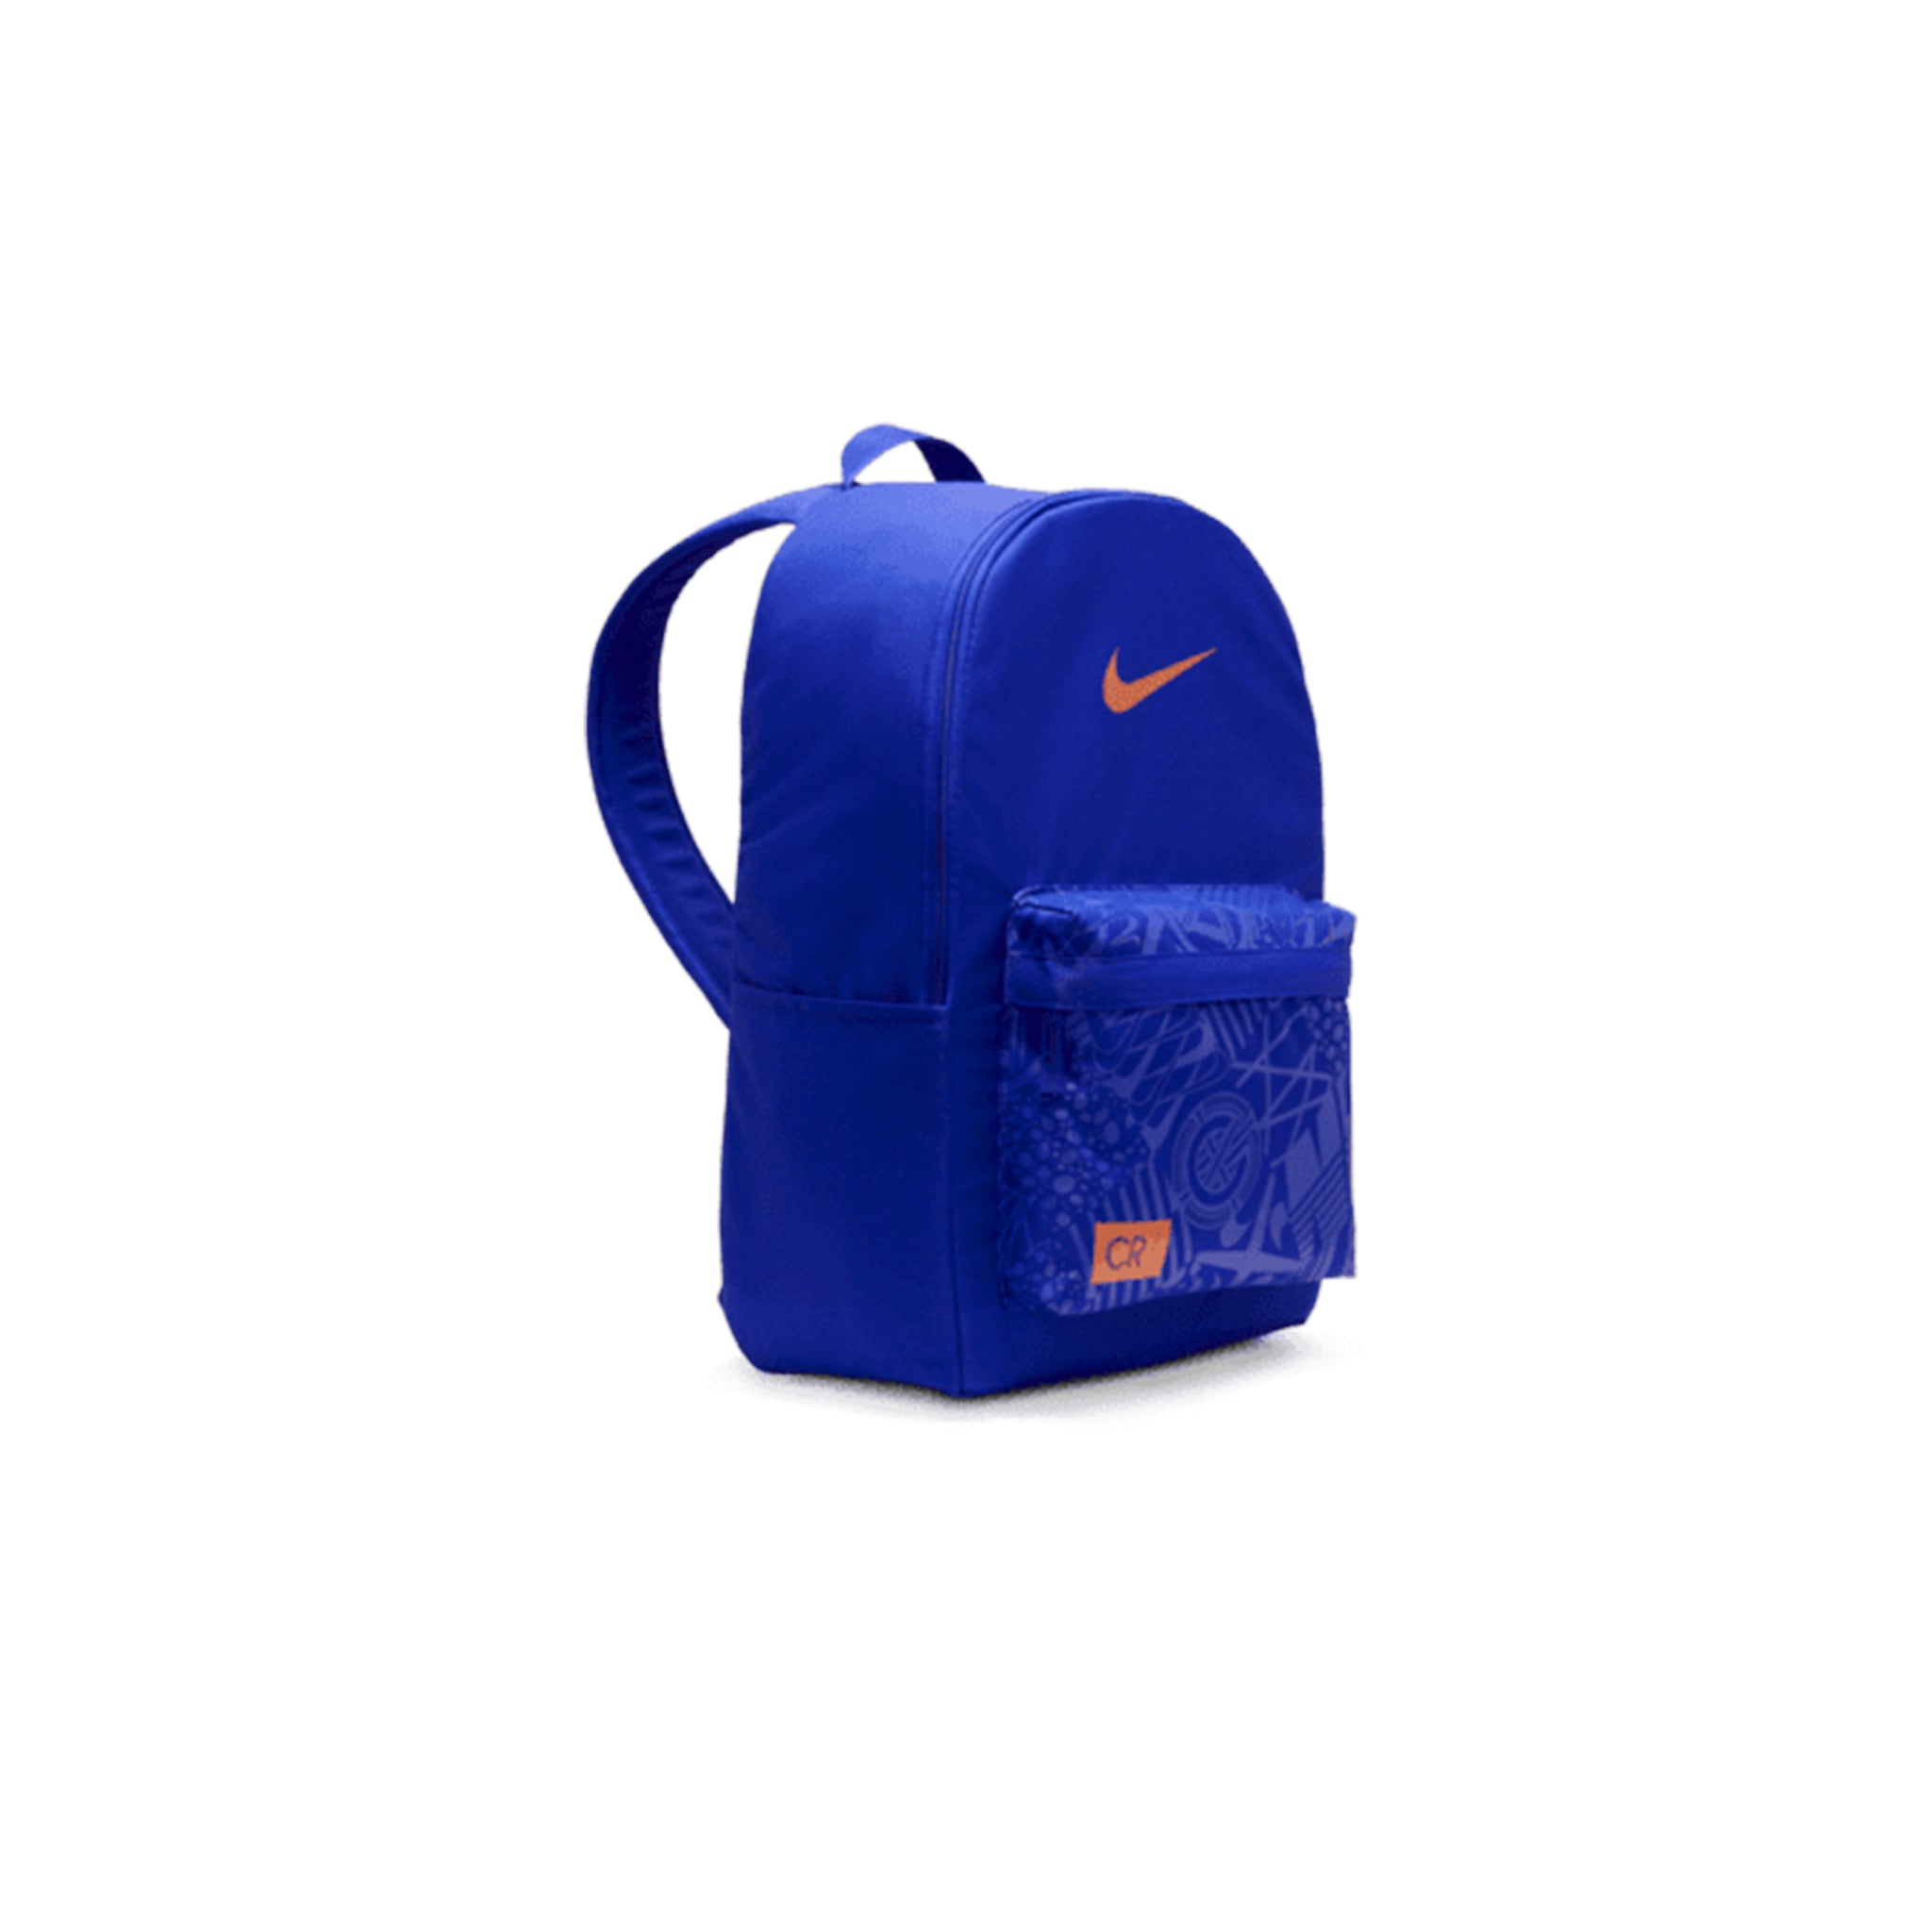 NIKE Mercurial CR7 Backpack